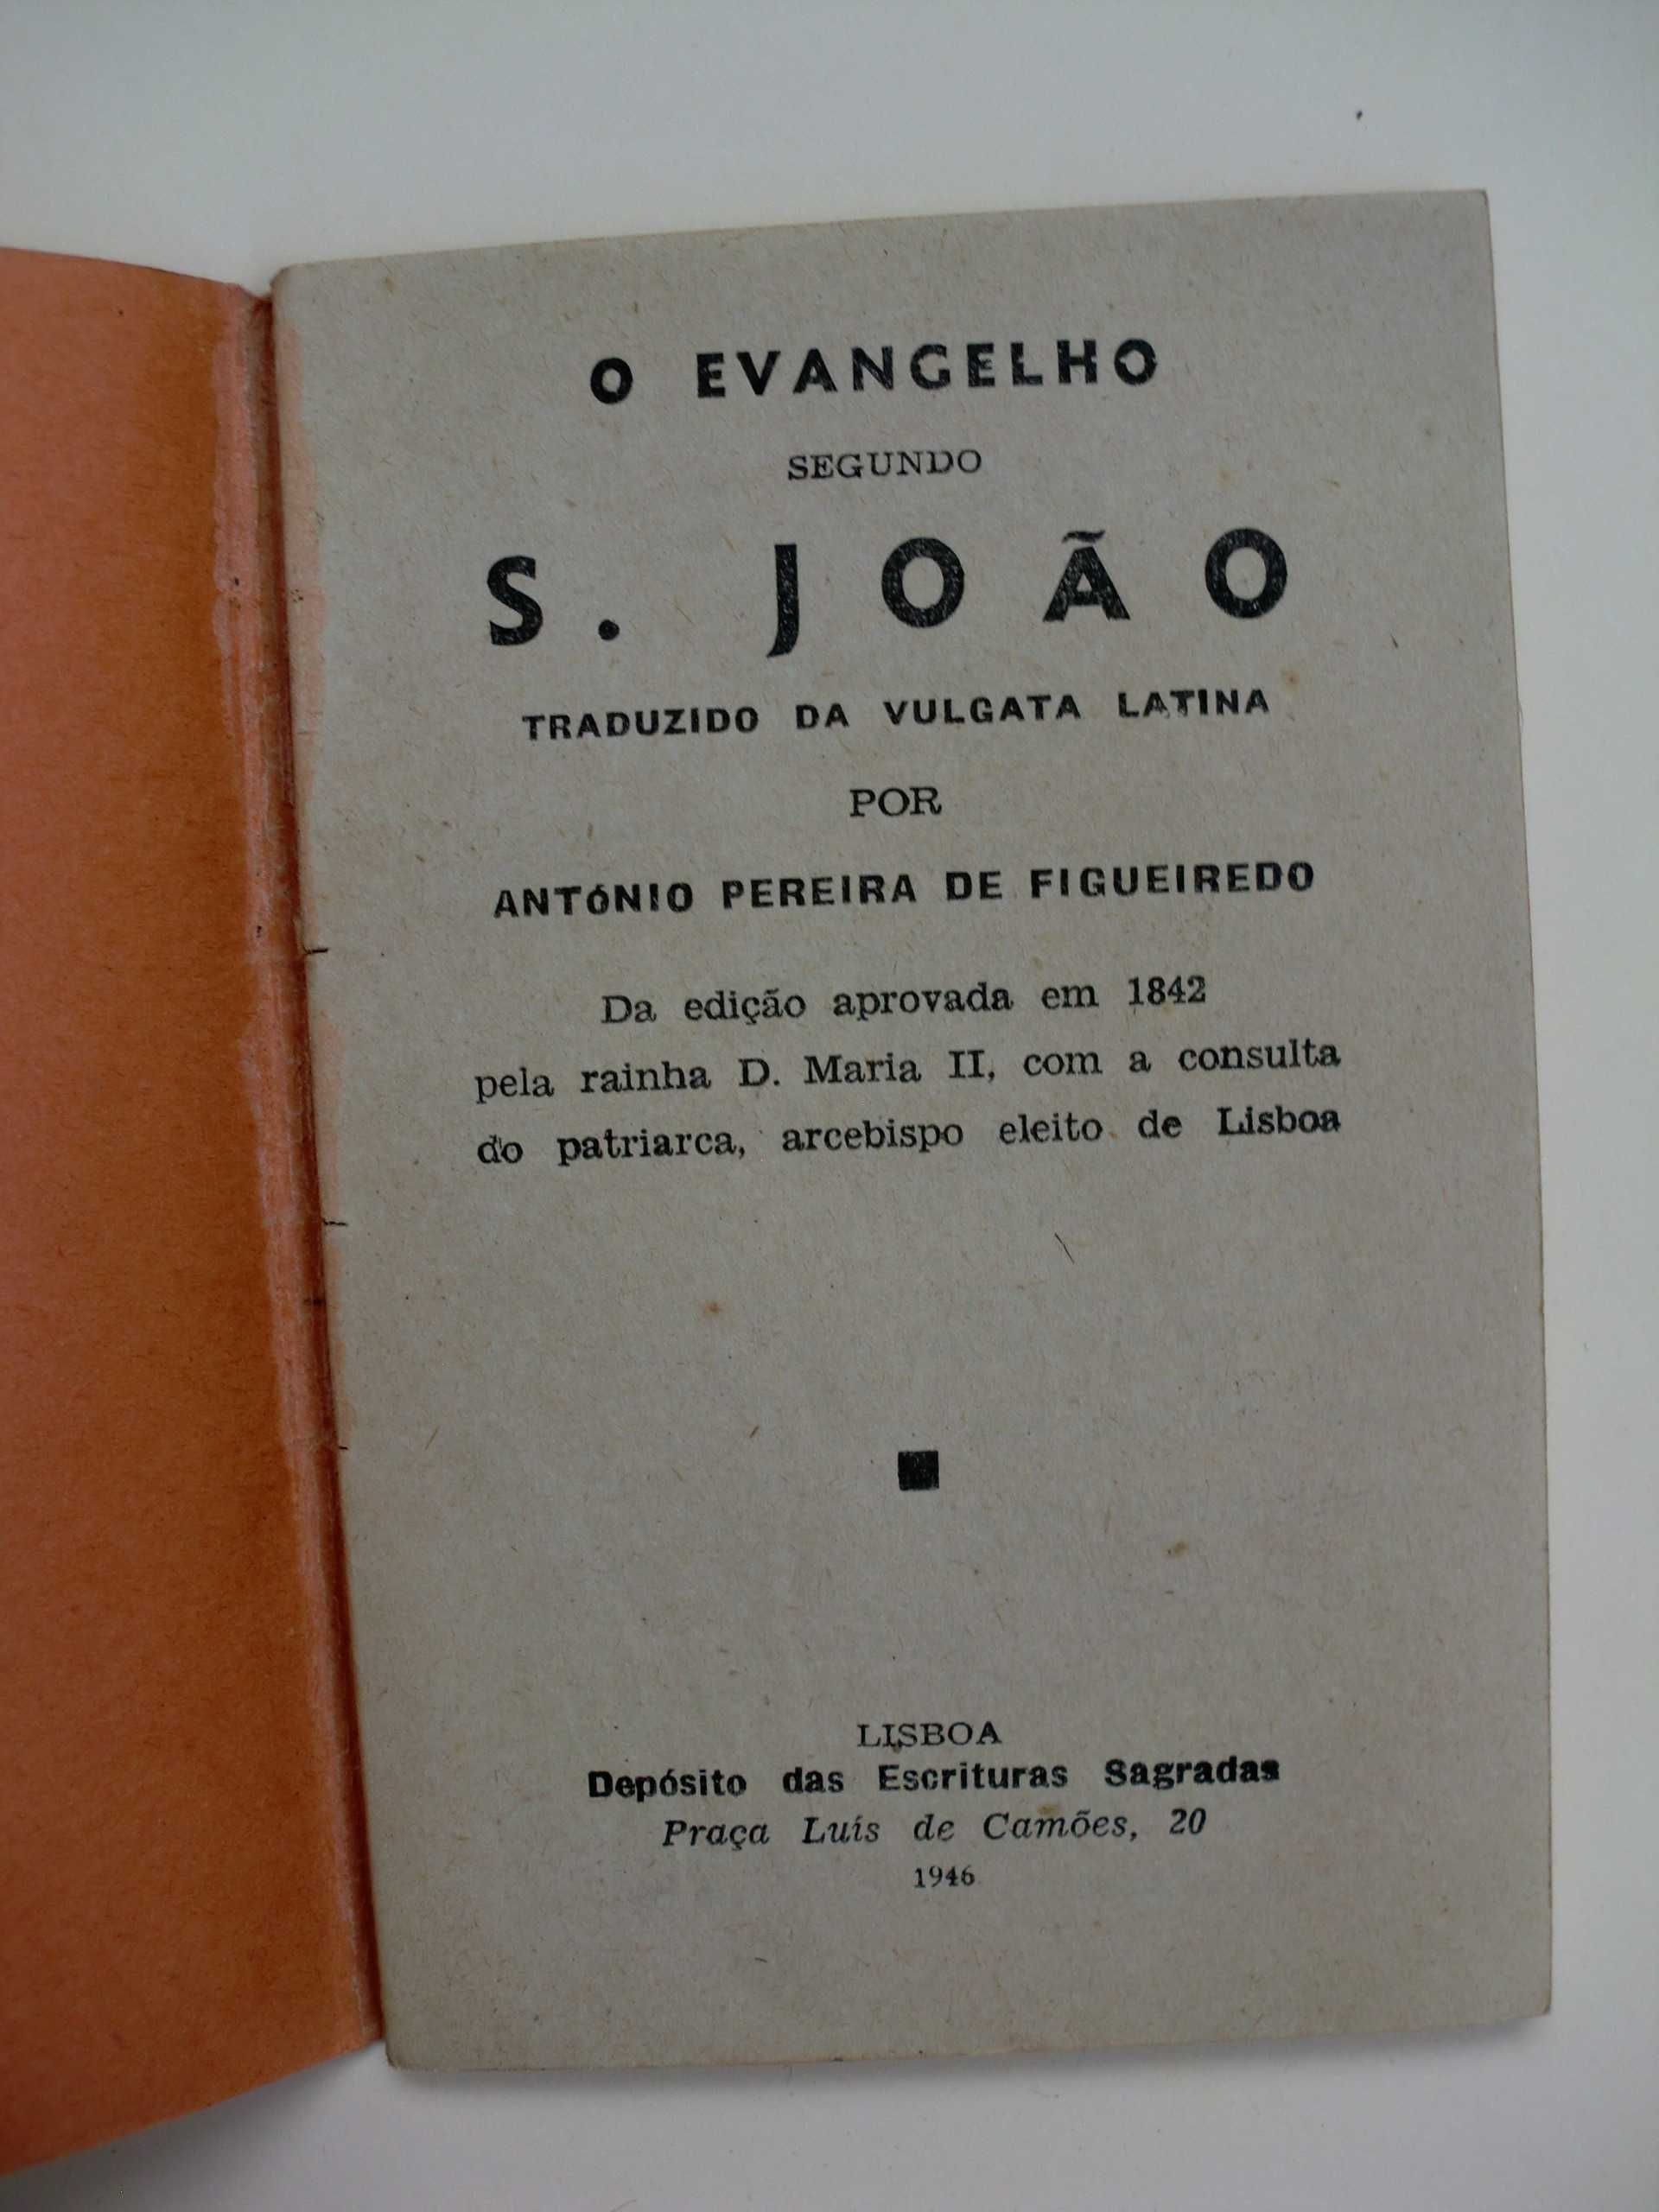 Evangelhos
Padre Pereira Figueiredo